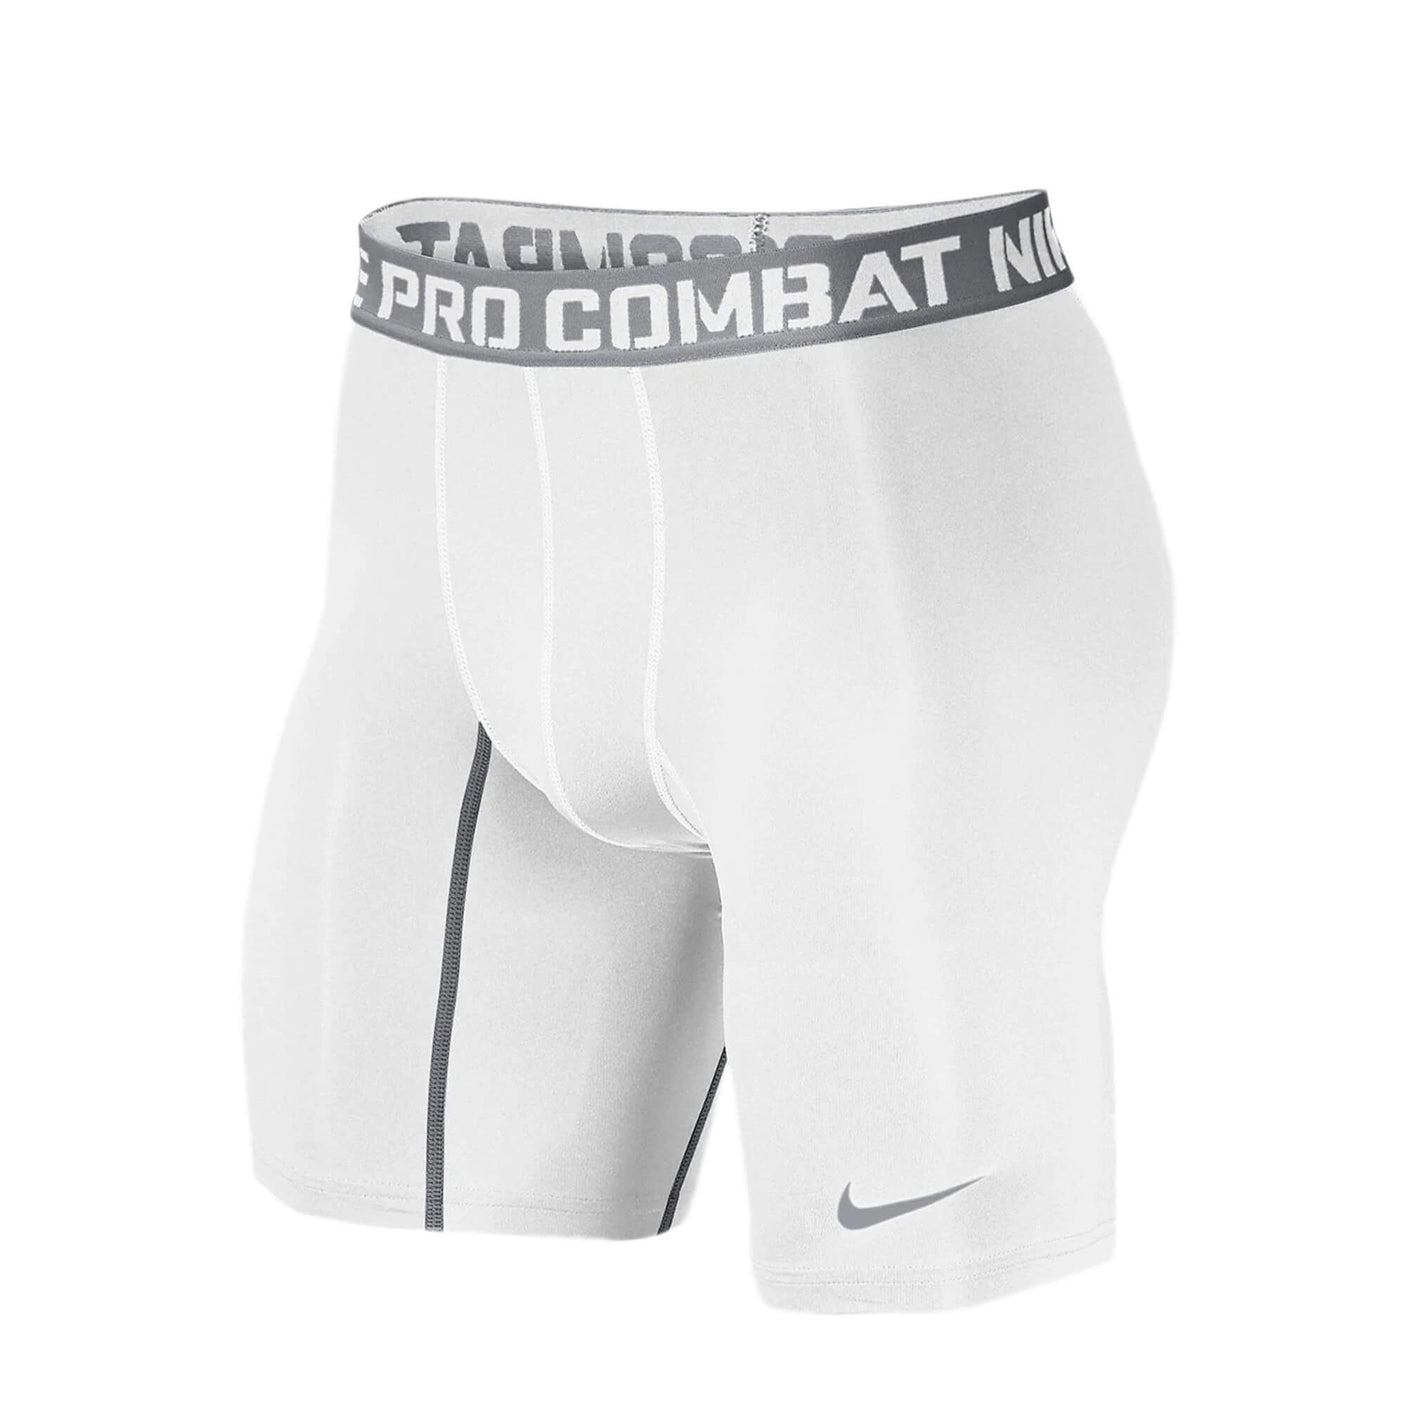 Nike Men's Pro Combat Tights Shorts White/Grey front